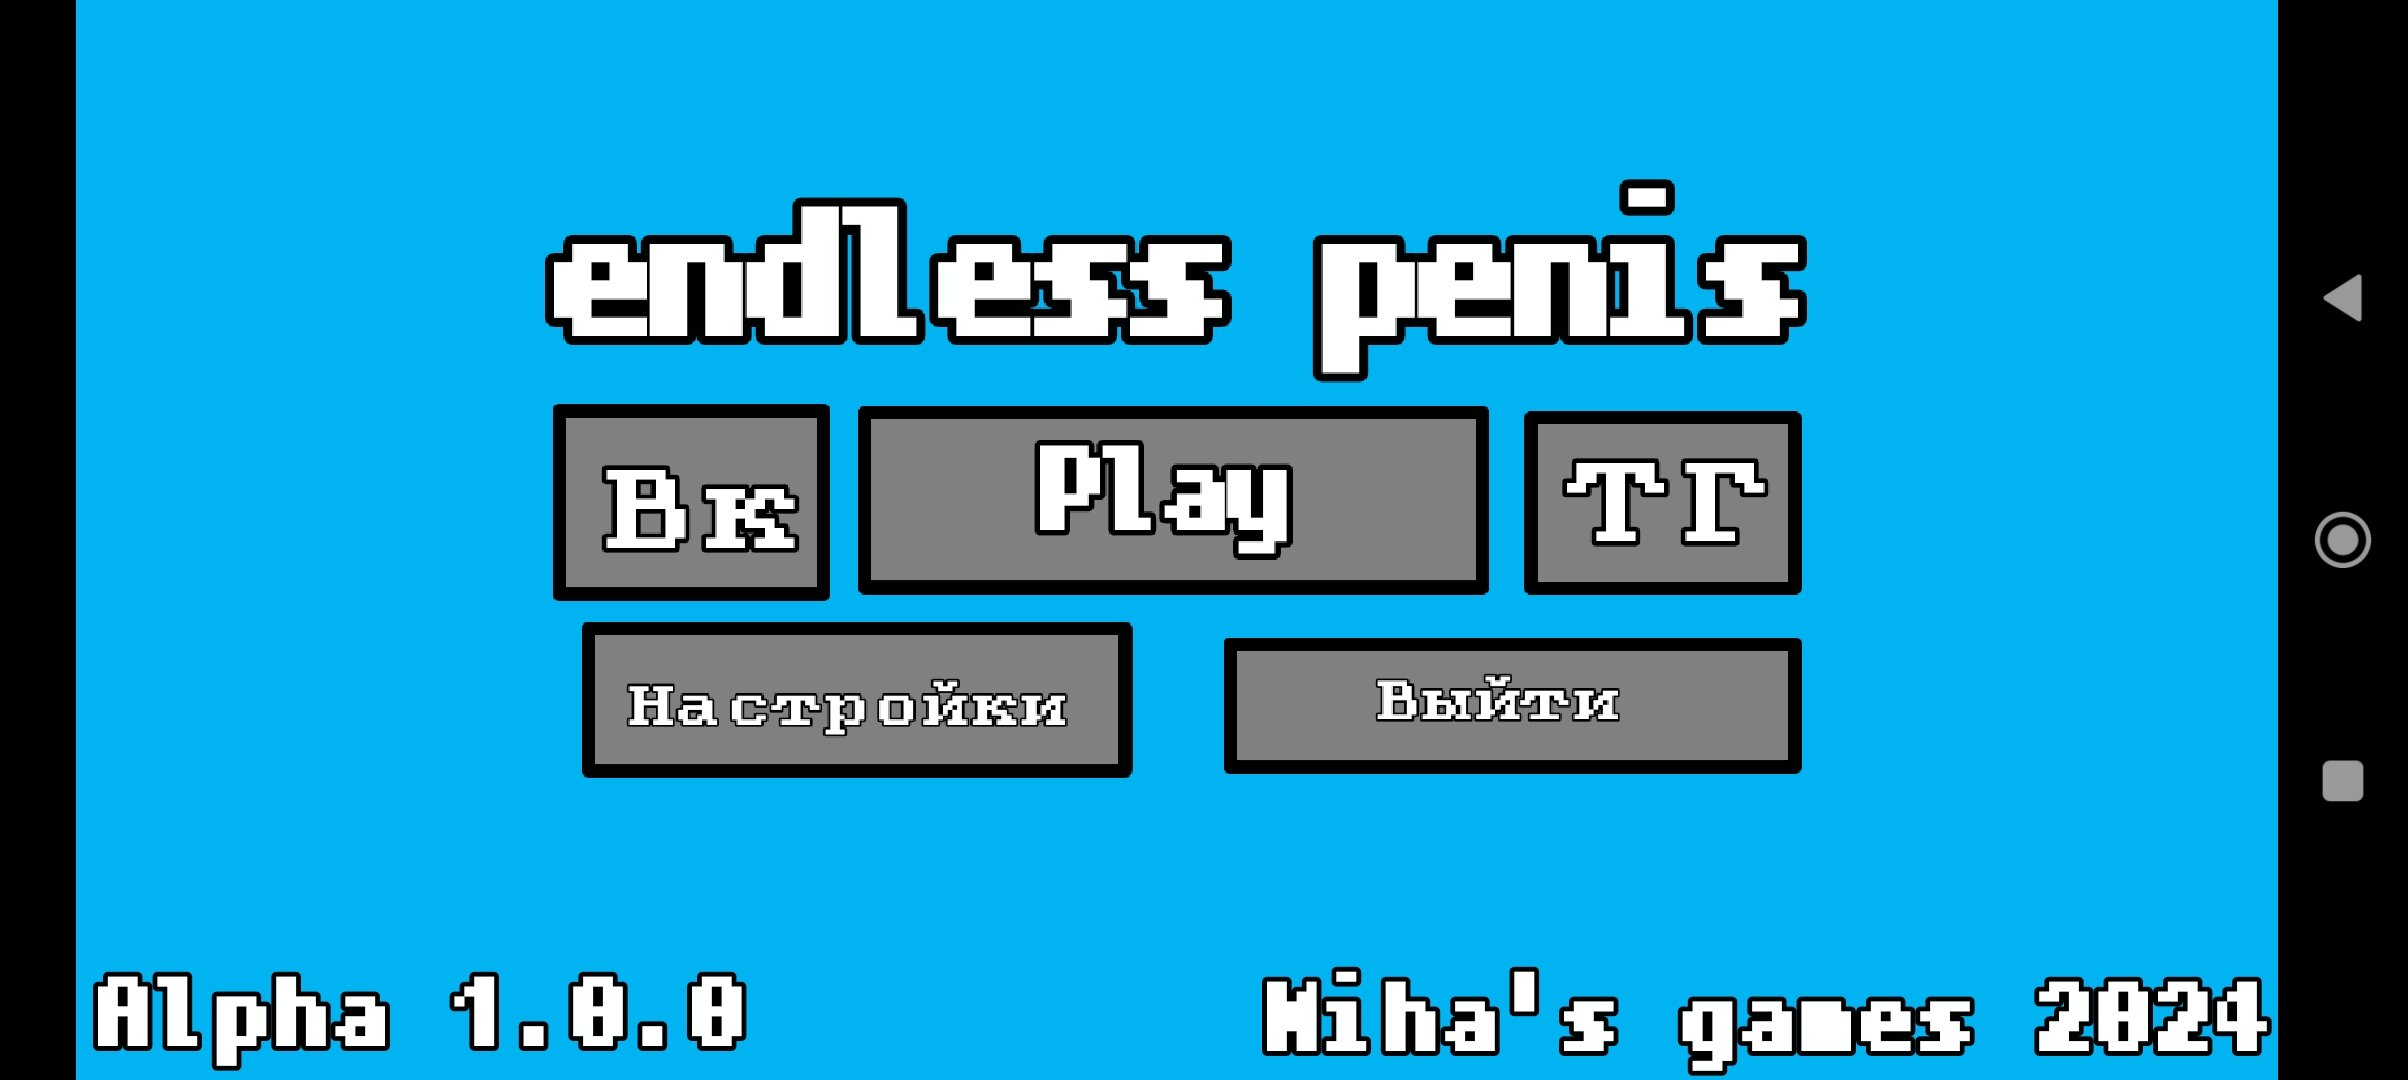 Endless penis